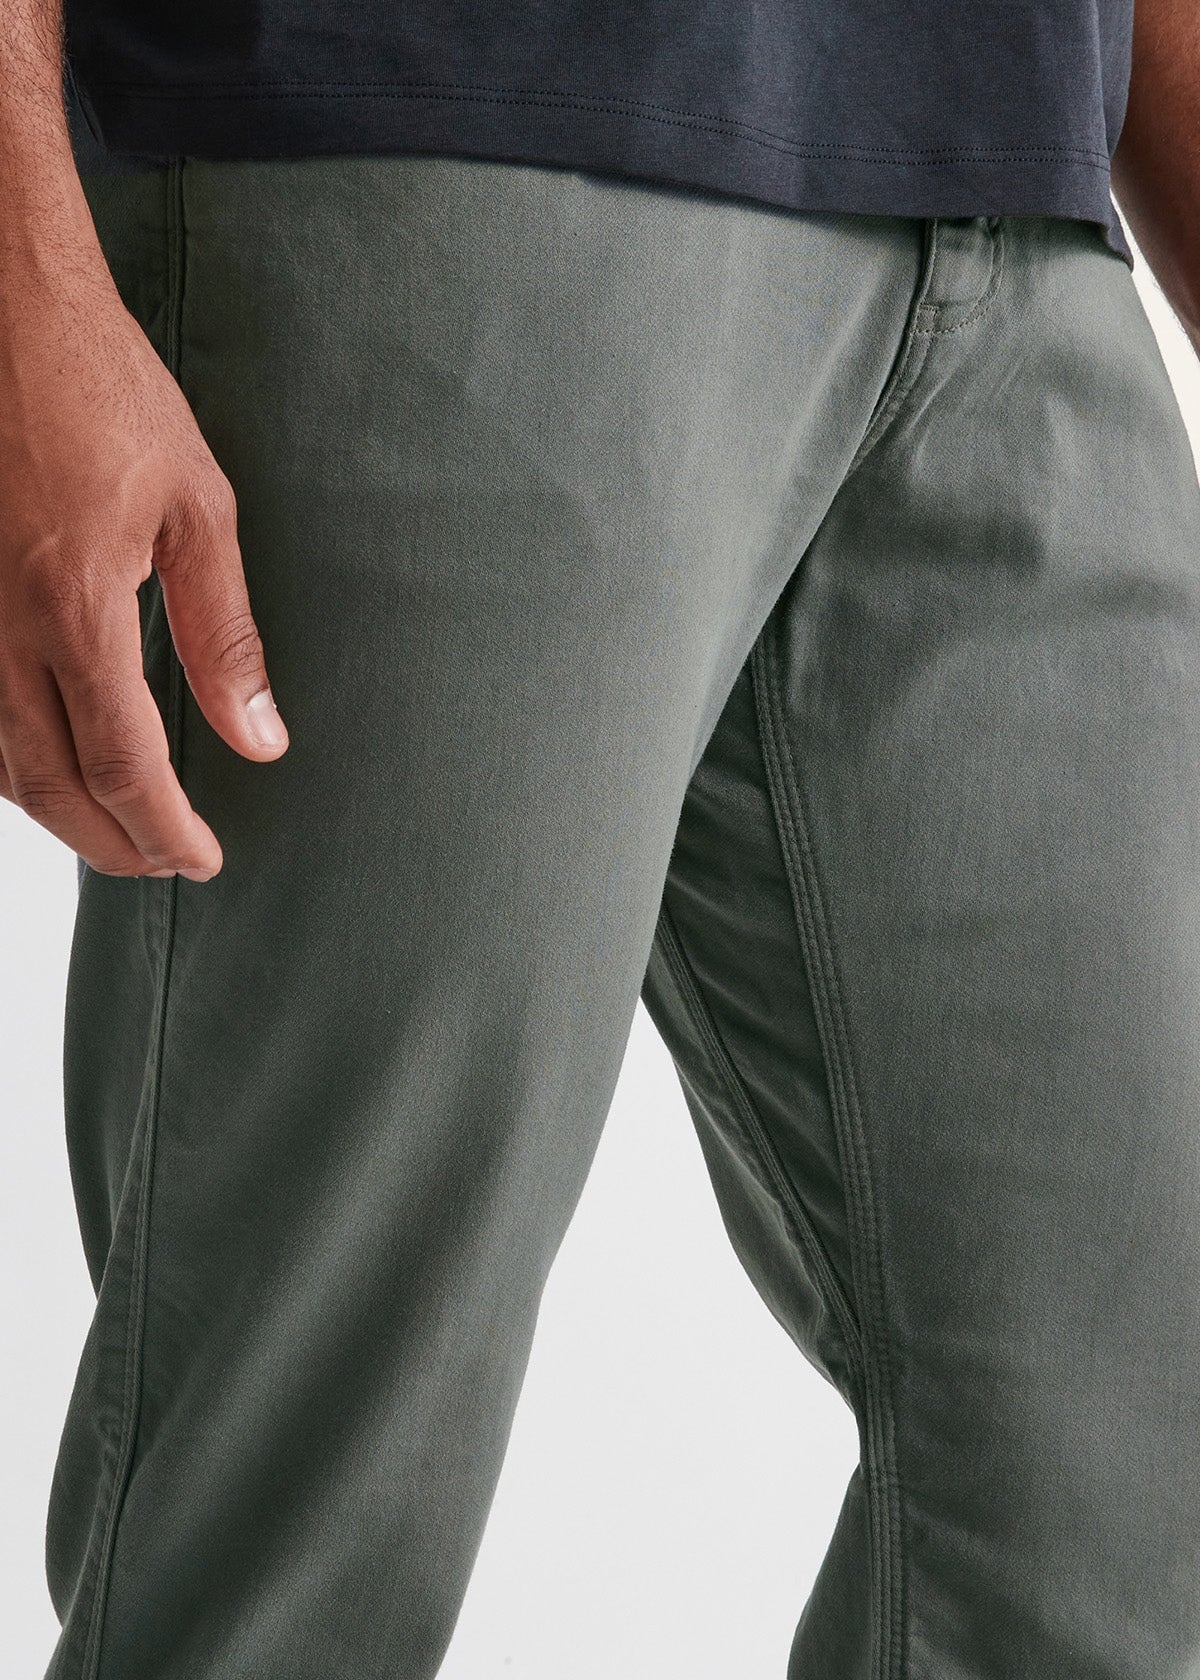 Andre Men's Zipper Pants • Immoral Fashion